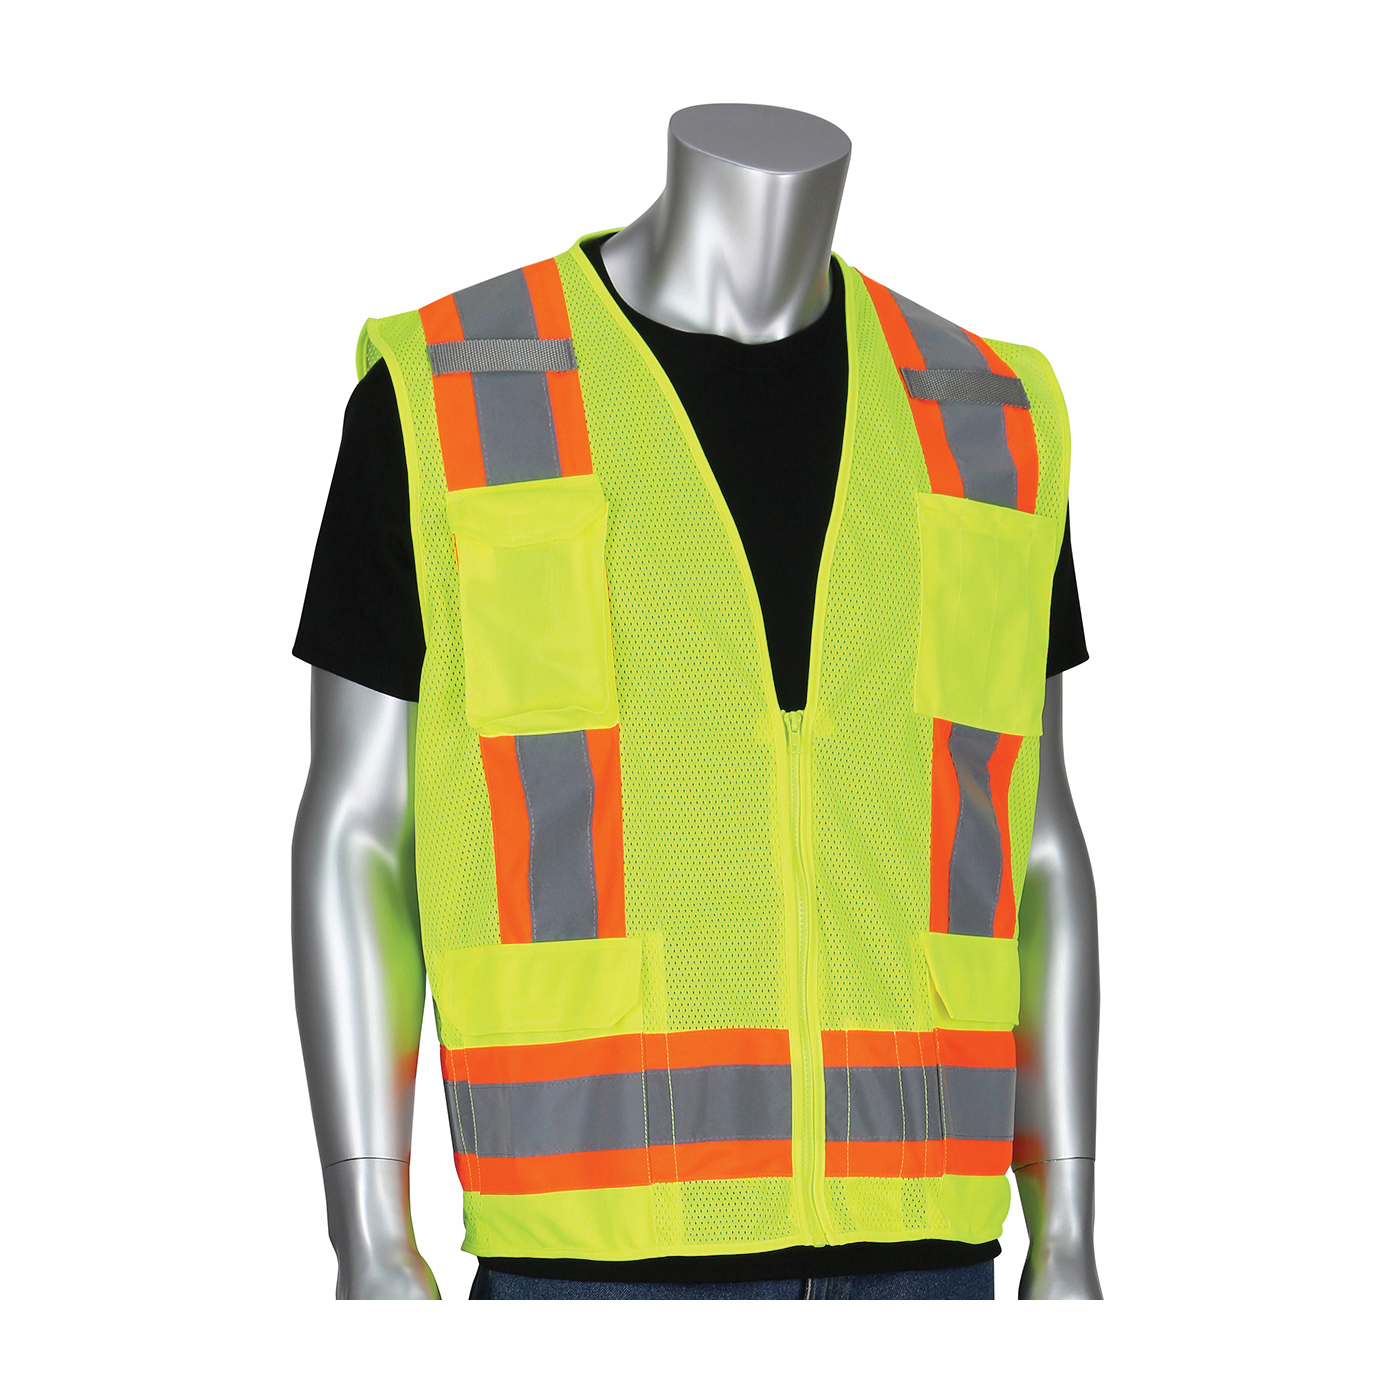 PIP® 302-0500M-LY/5X 2-Tone Surveyor Safety Vest, 5XL, Hi-Viz Lime Yellow, Polyester, Zipper Closure, 11 Pockets, ANSI Class: Class 2, Specifications Met: ANSI 107 Type R